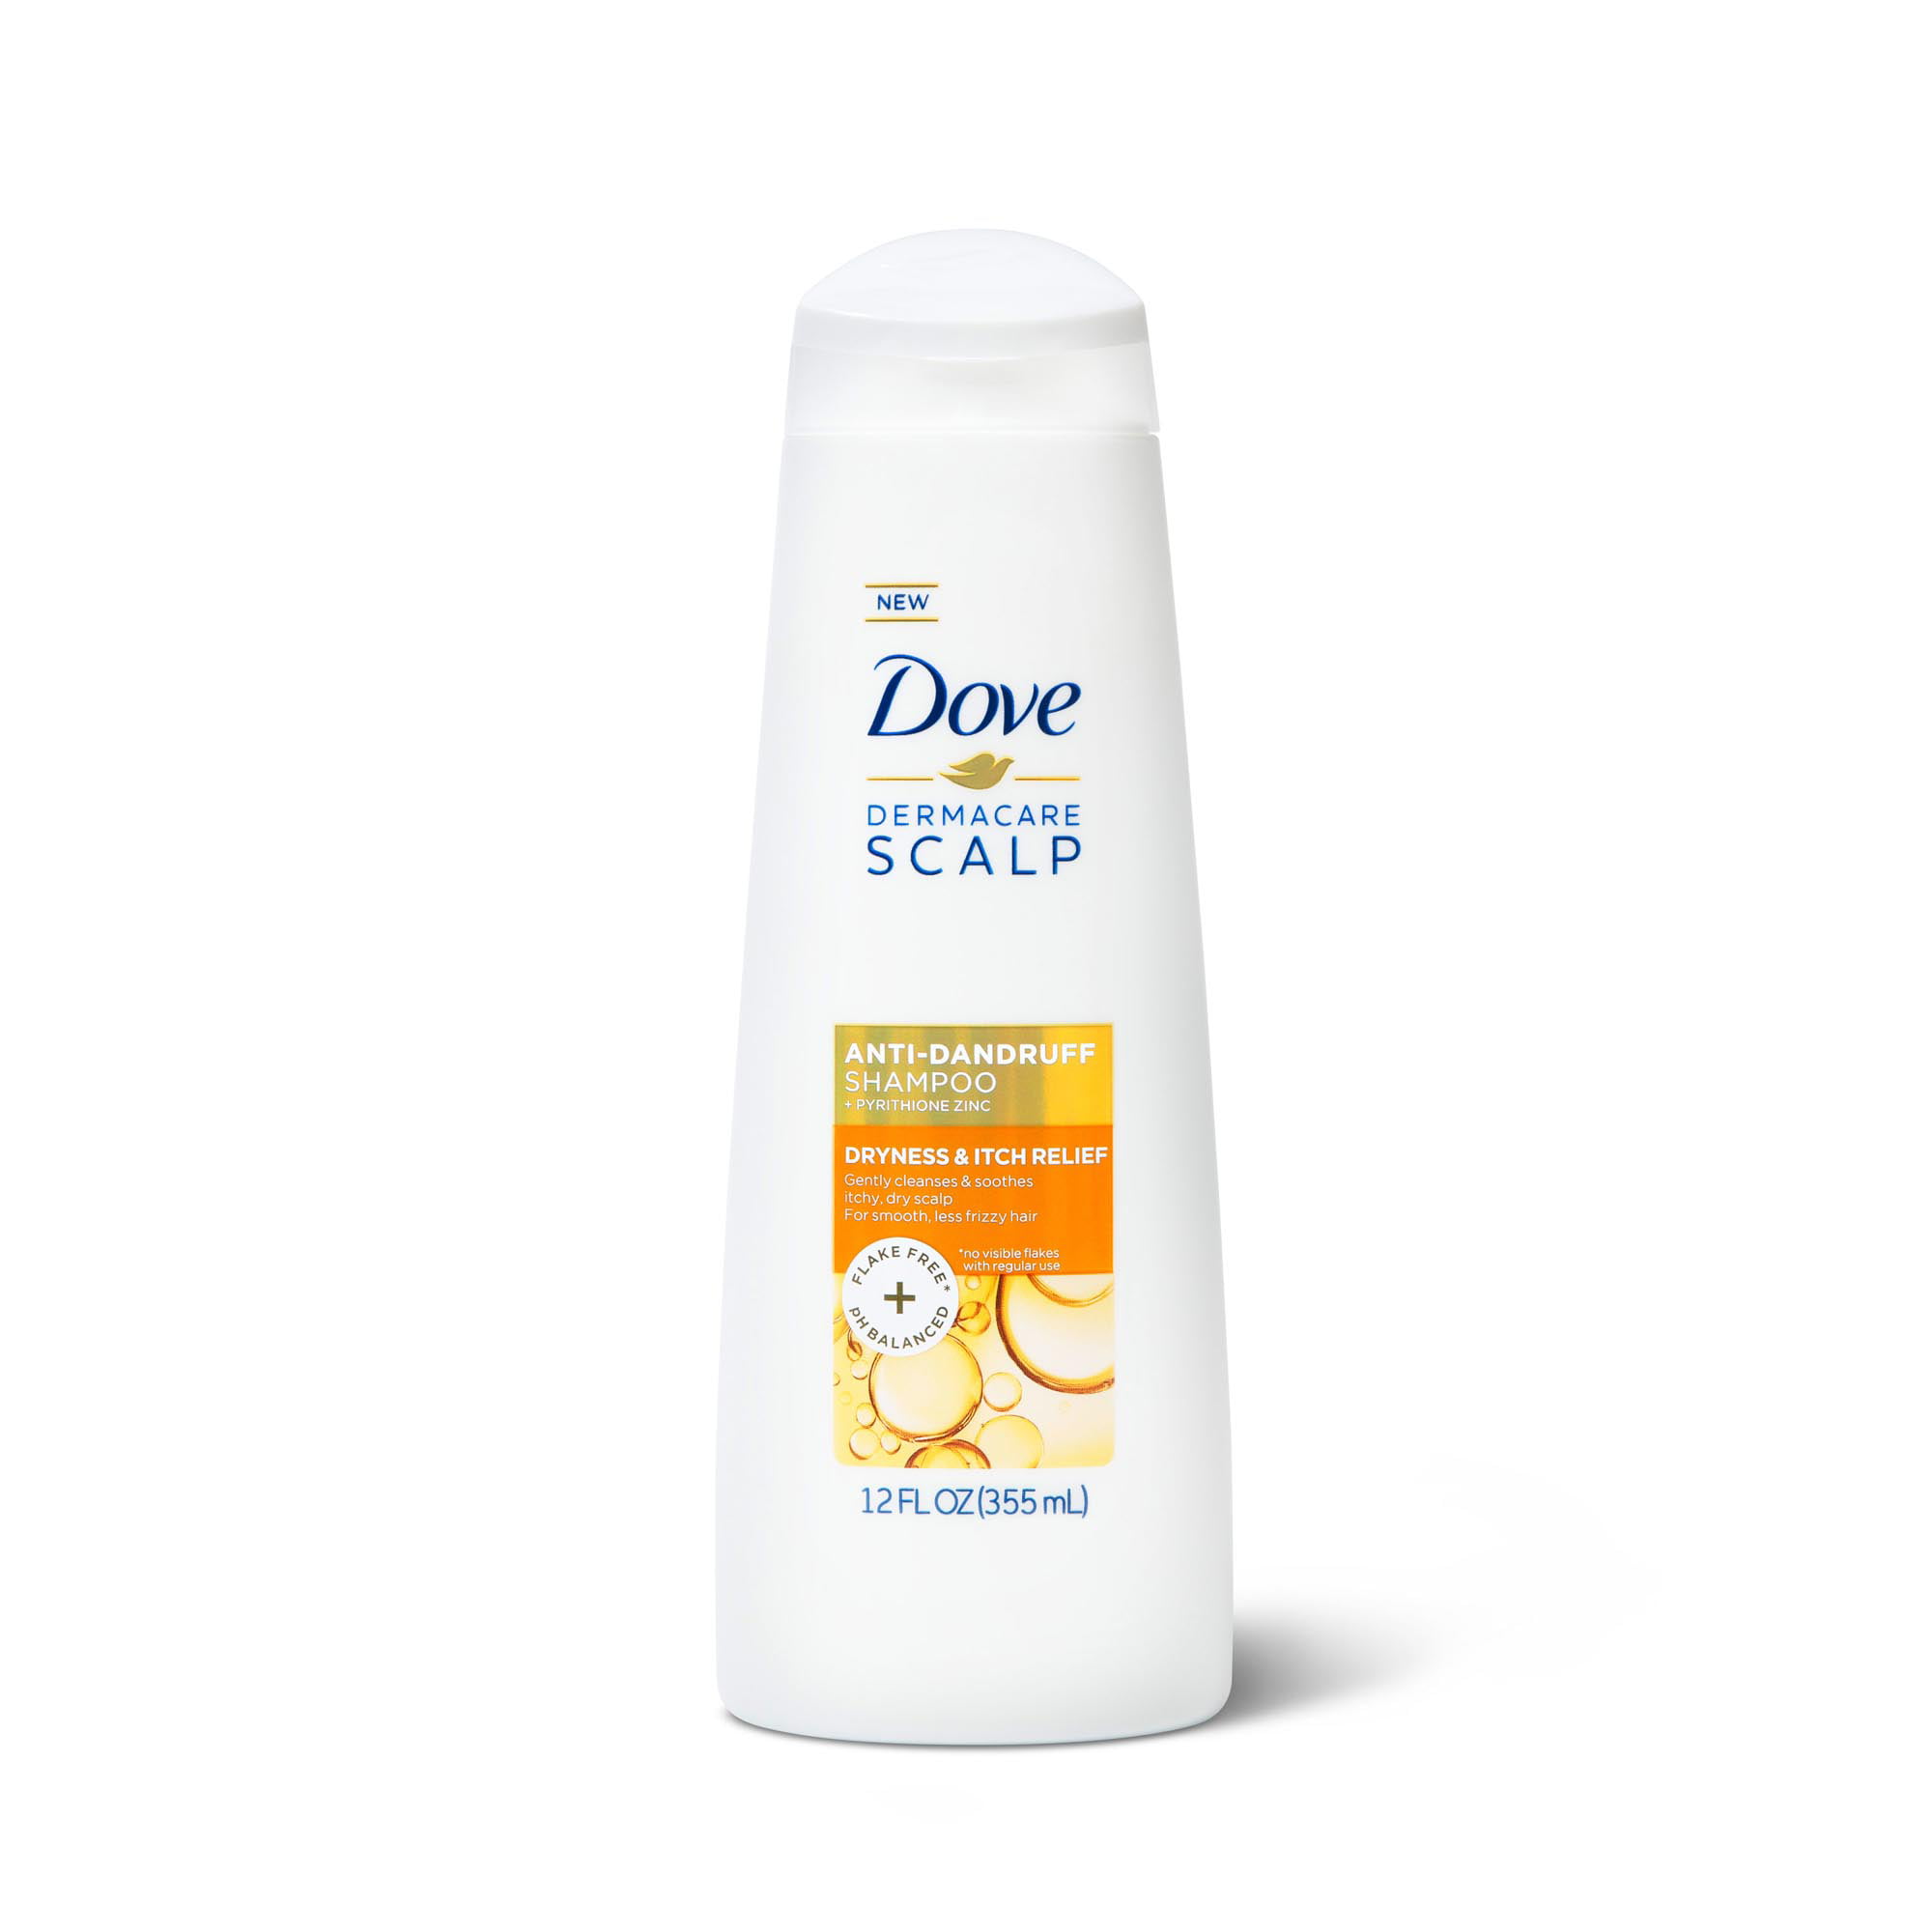 Dove Dermacare Scalp Anti Dandruff Daily Shampoo with Pyrithione Zinc, 12 fl oz - image 1 of 11